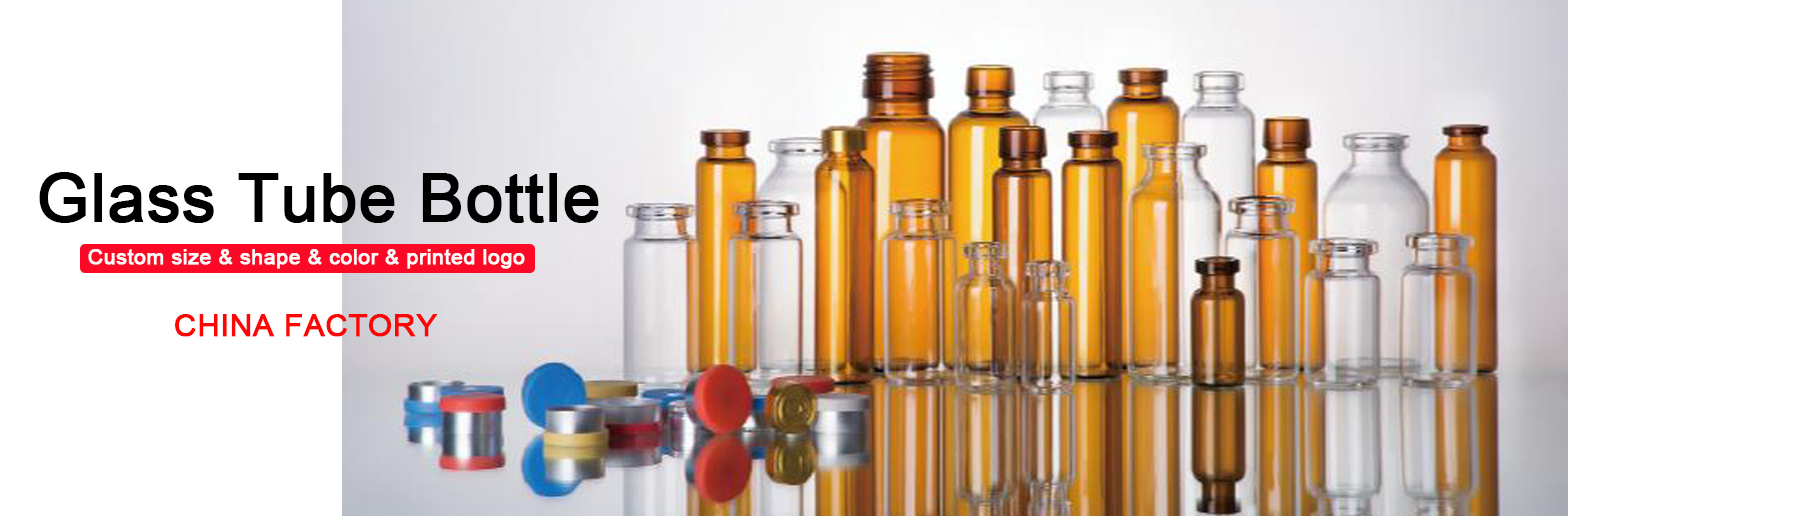 Production & wholesale glass tube bottles